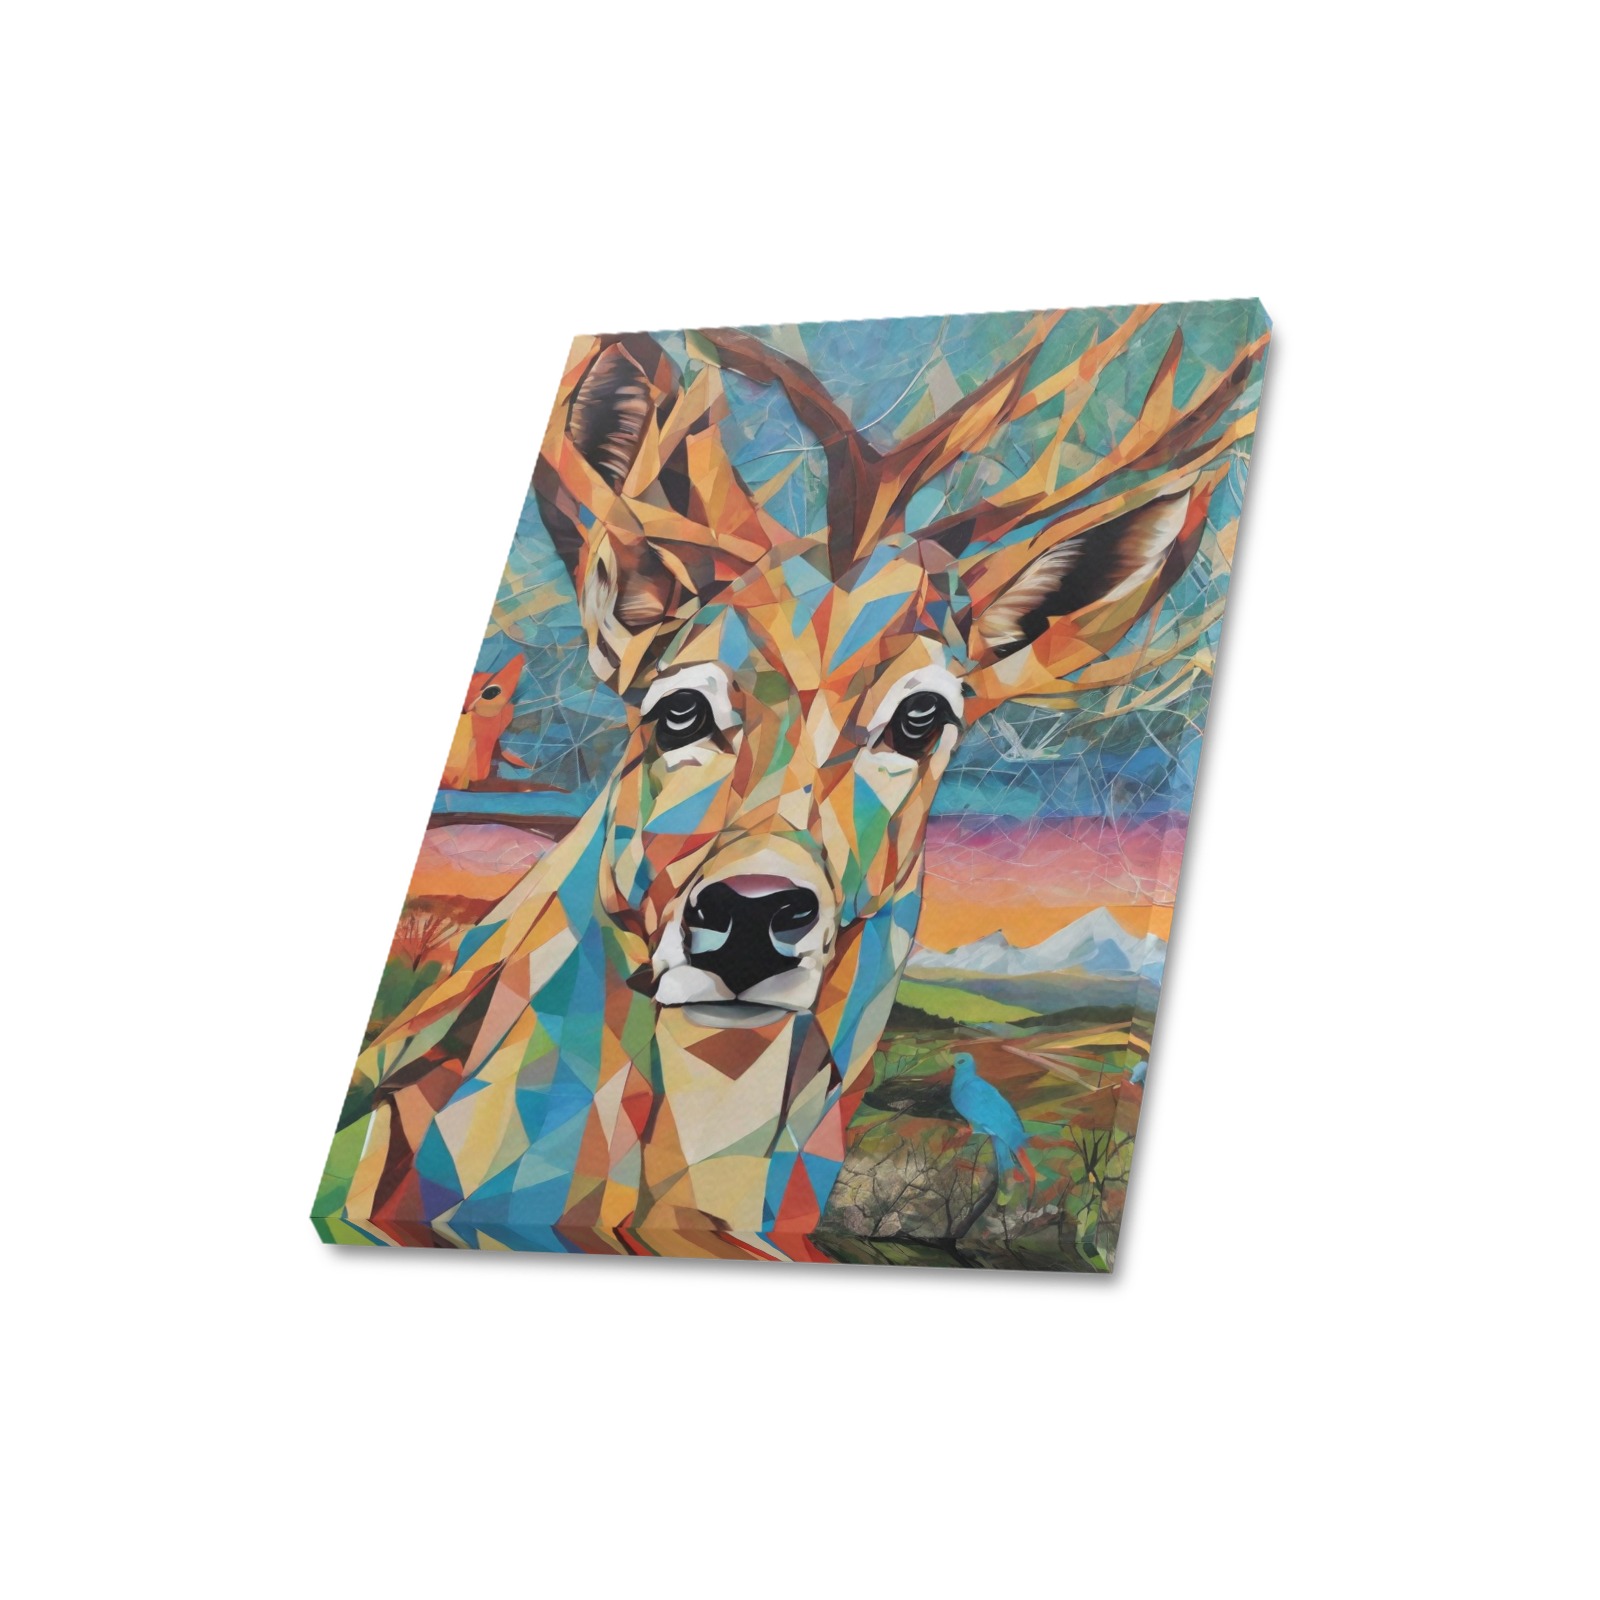 Deer Upgraded Canvas Print 16"x20"